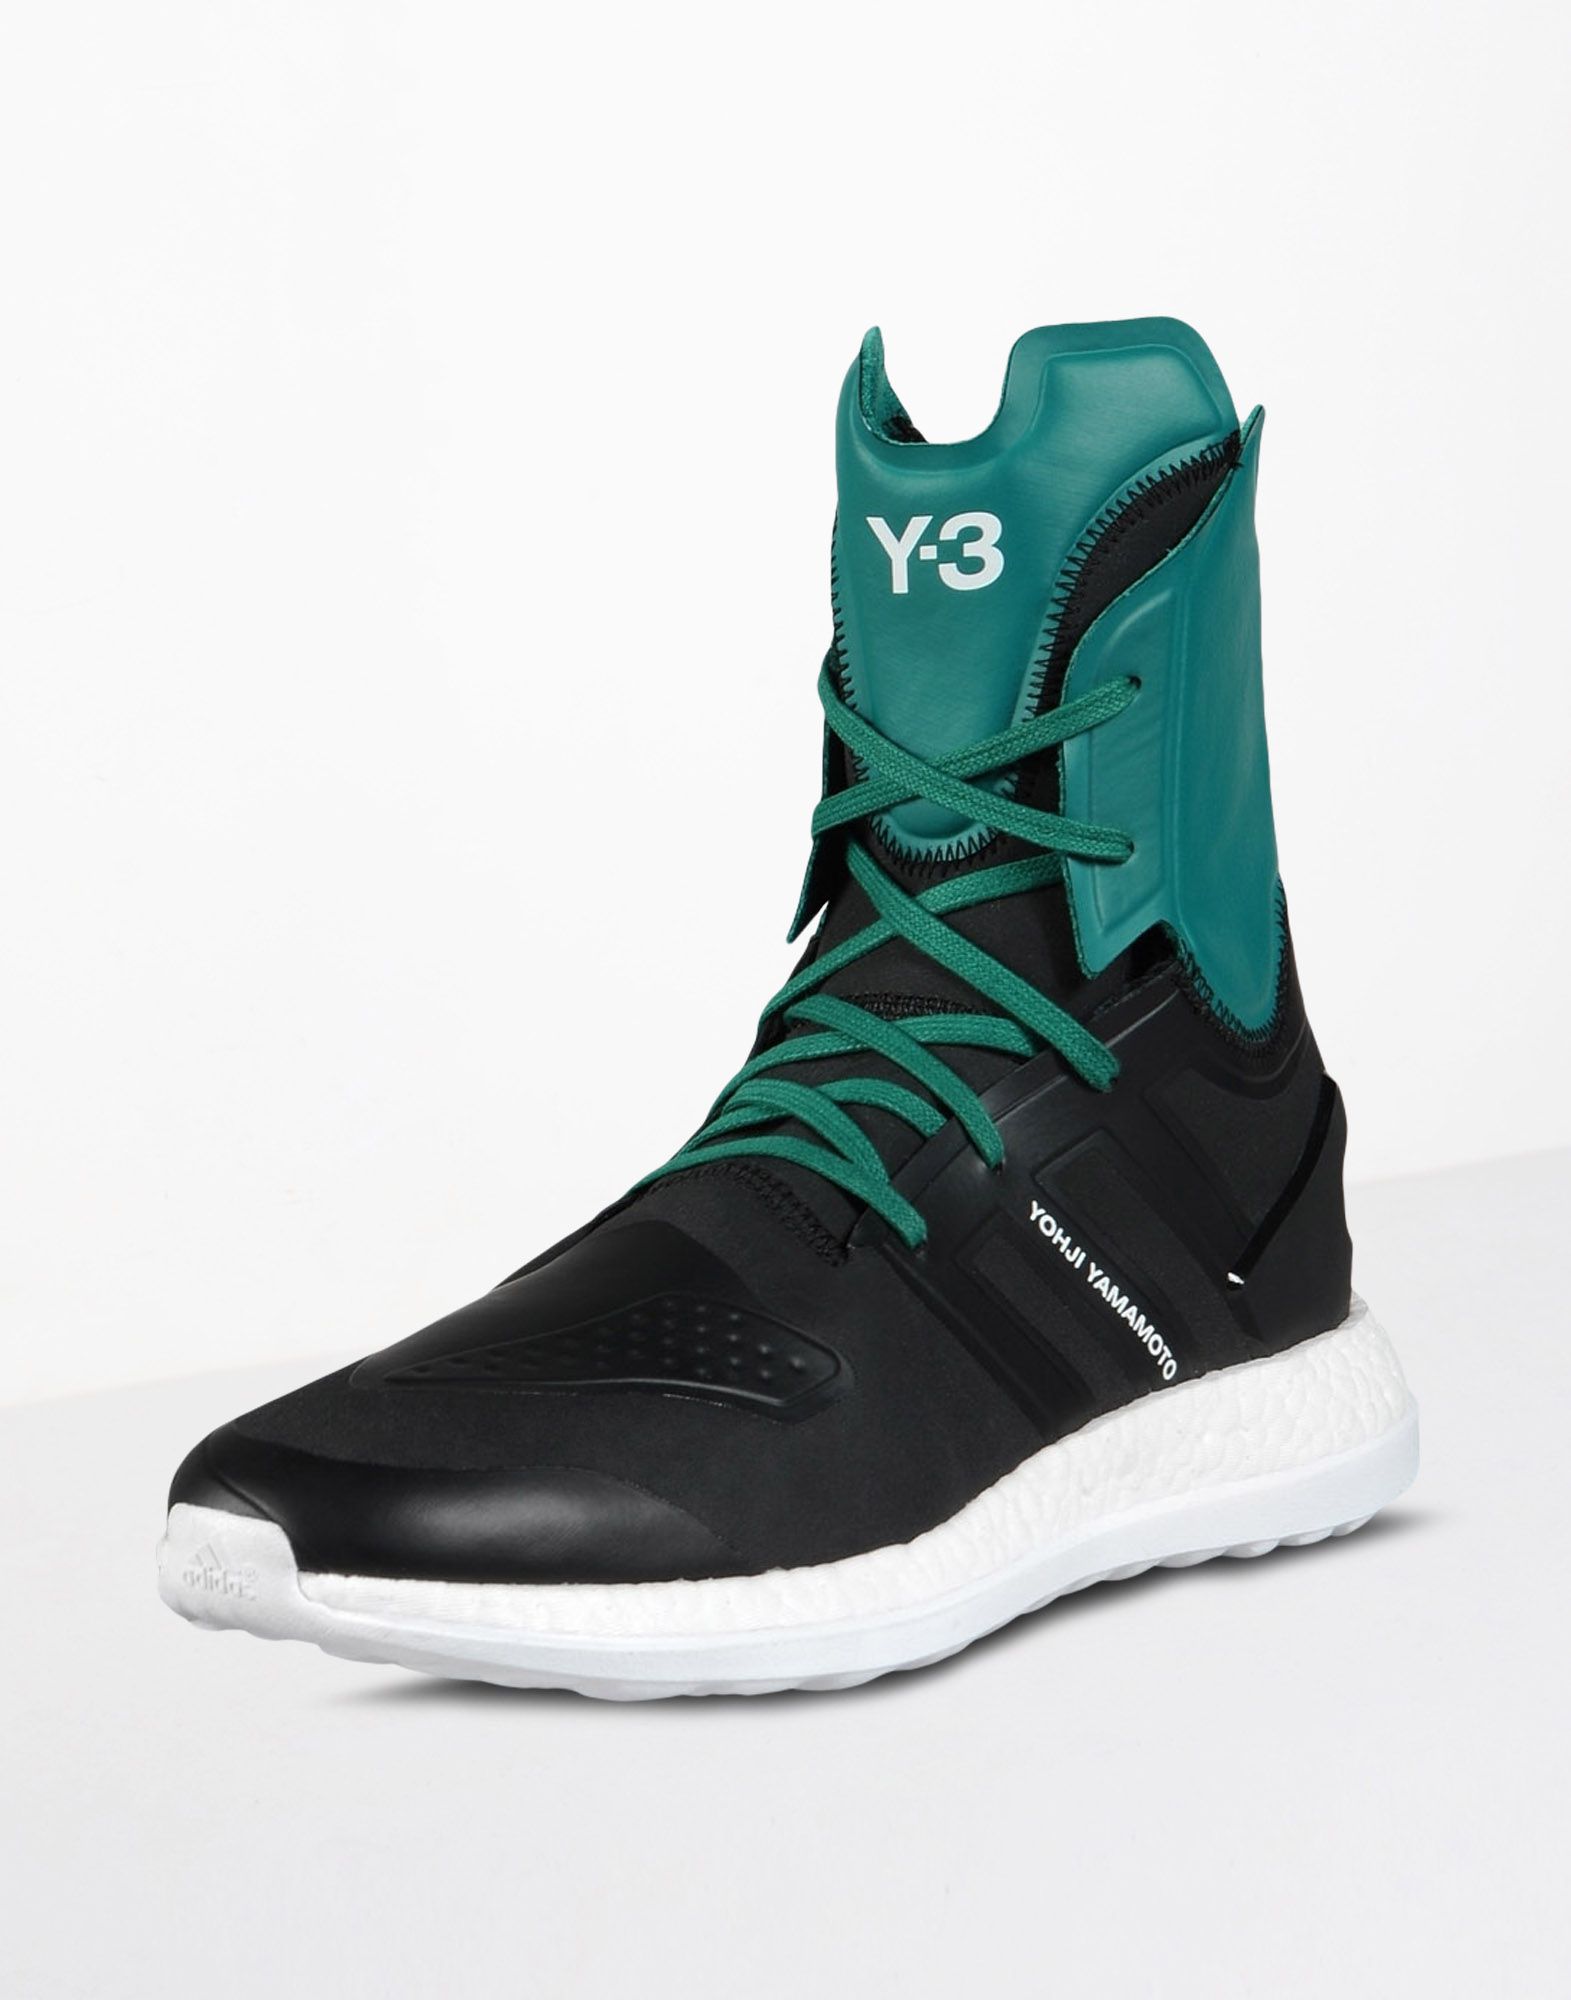 Y 3 PUREBOOST ZG HIGH for Men | Adidas Y-3 Official Store